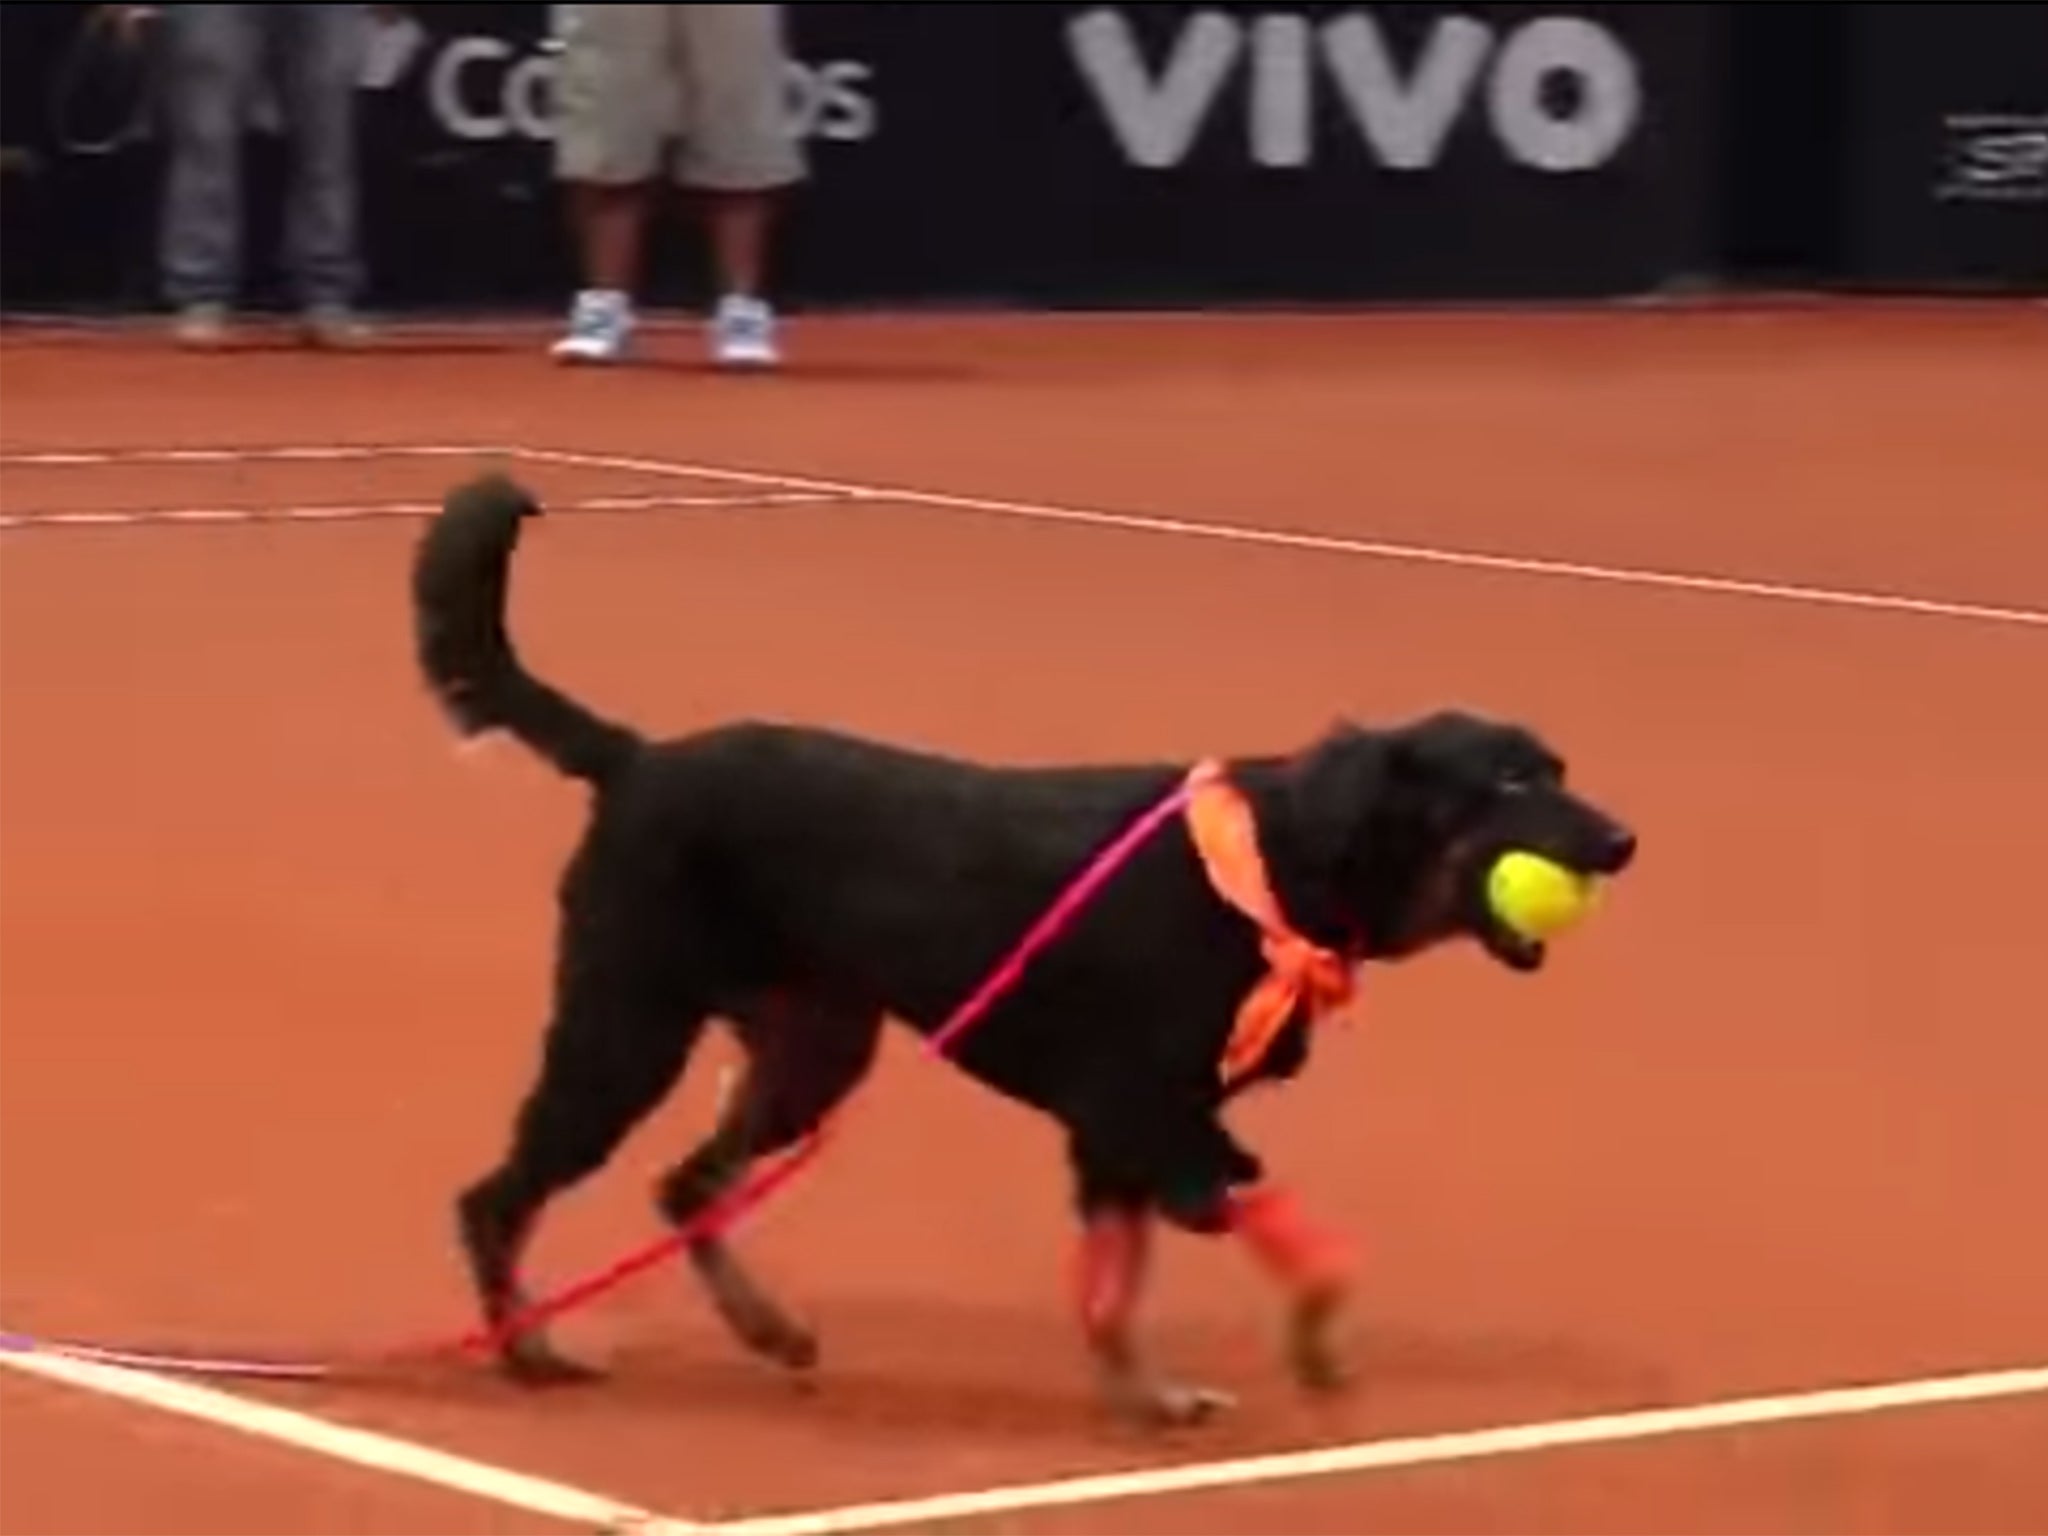 Street 'ball dog' collects a loose tennis ball during Brazil Open match